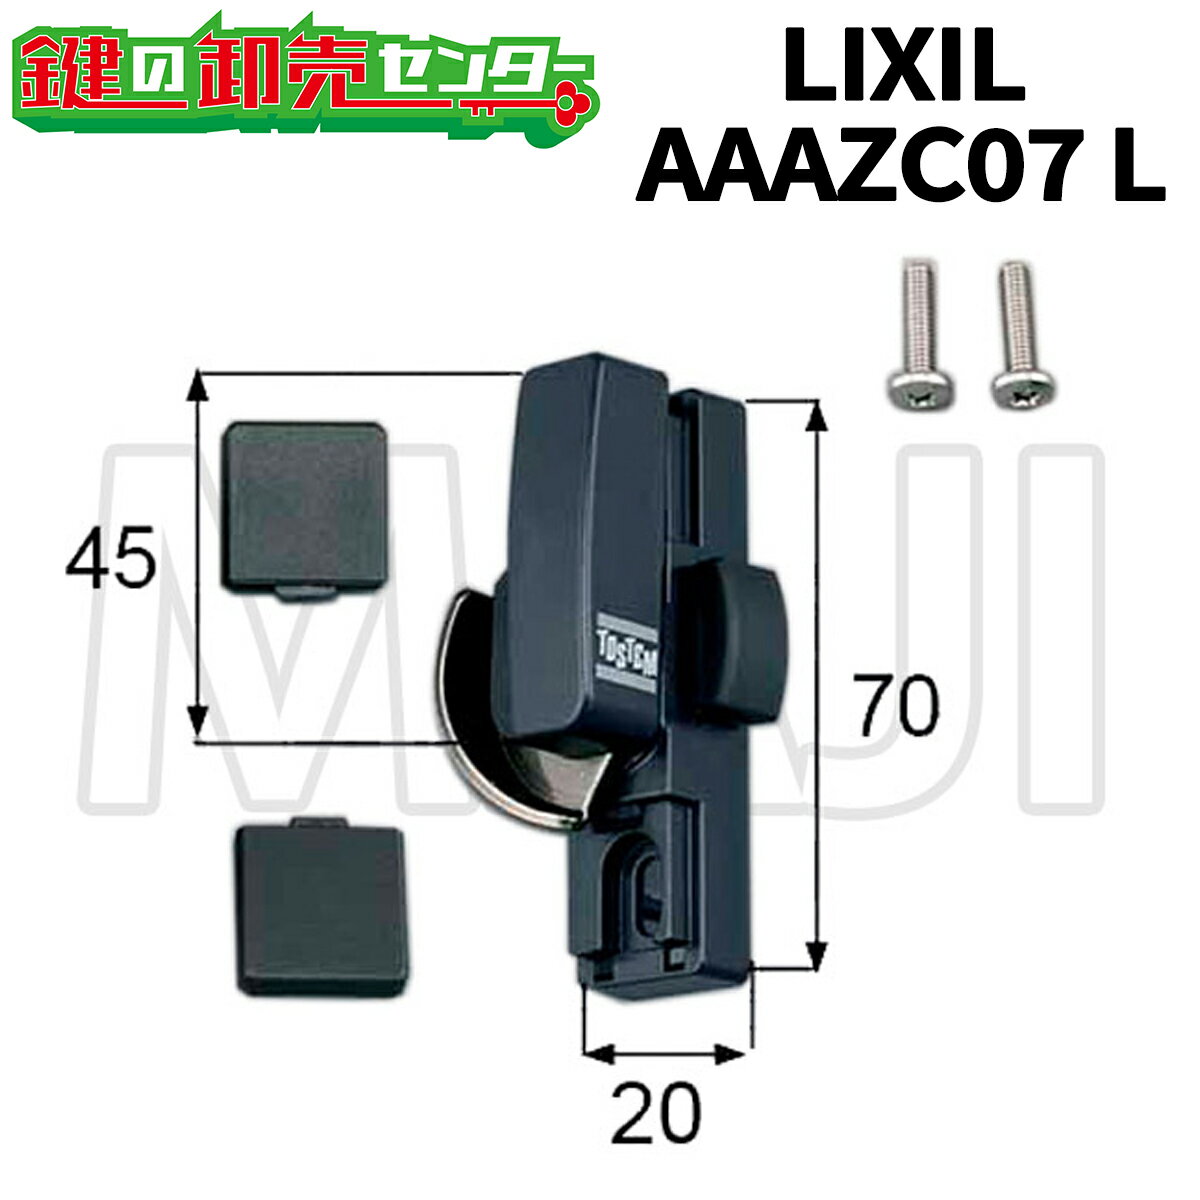 LIXIL リクシル AAAZC07 L/R ・ブロンズ(銅色) ・TOSTEM トステム 鍵(カギ) 交換 取替